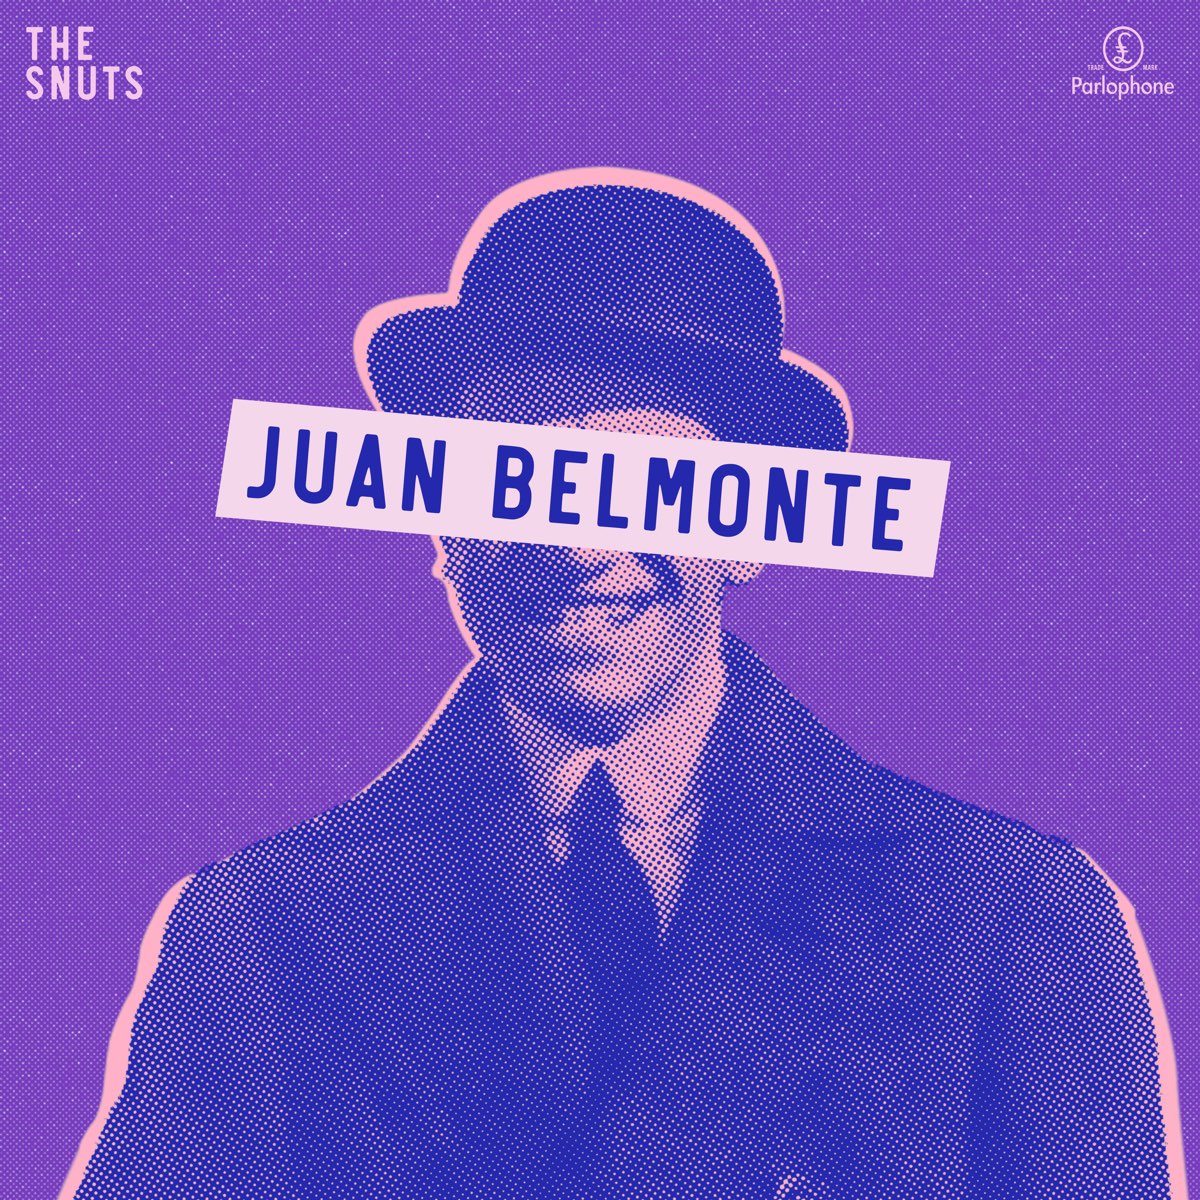 The Snuts Juan Belmonte cover artwork